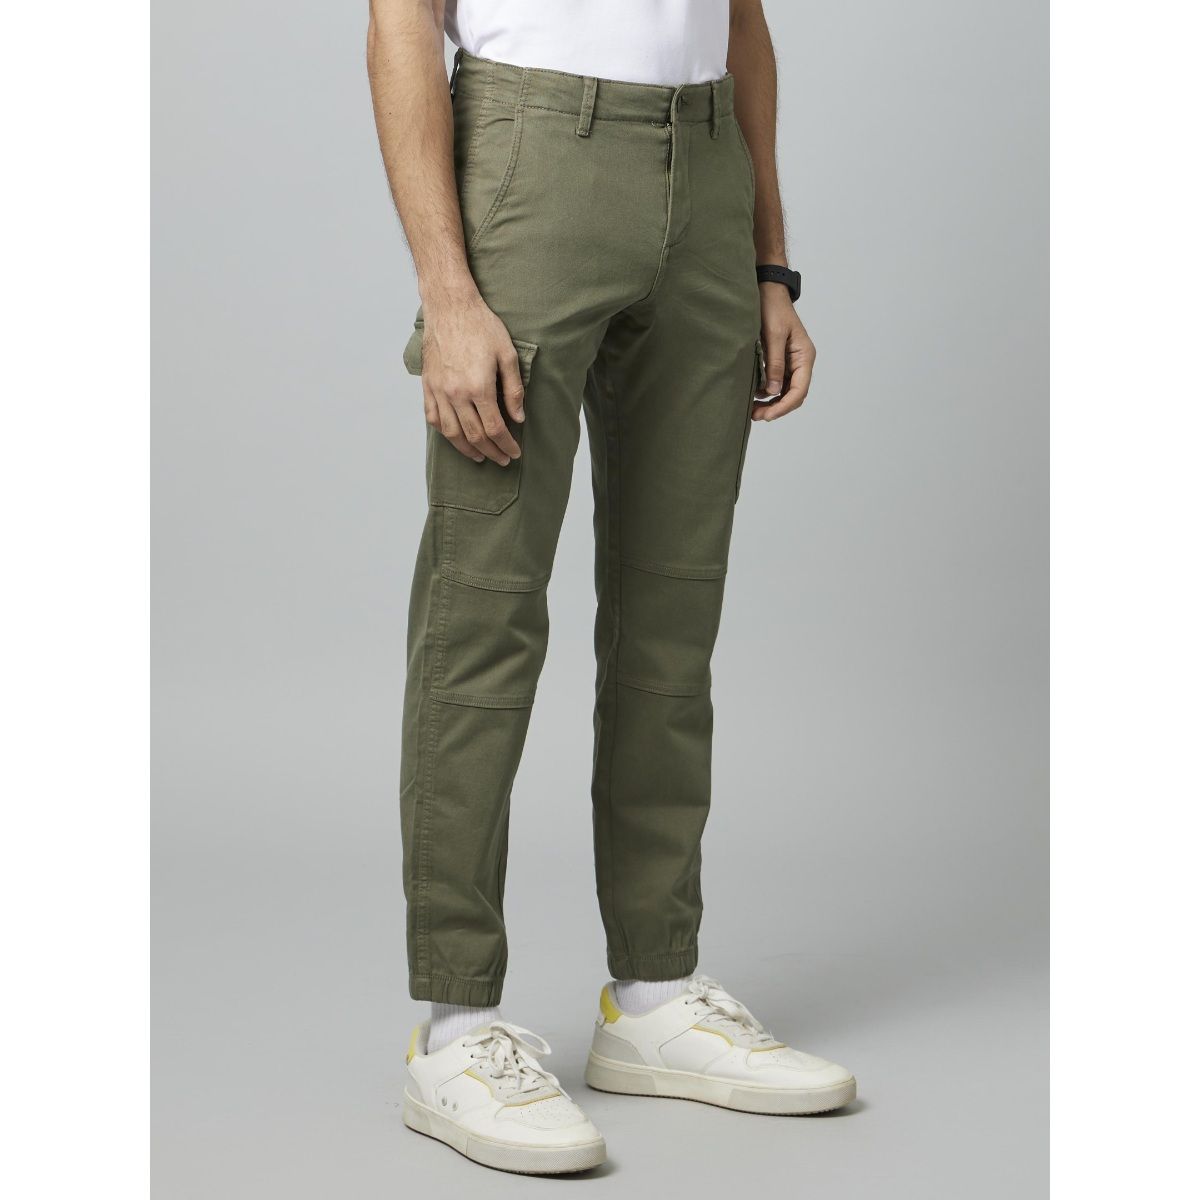 Buy Celio Men Regular Fit Solid Brown Cotton Trousers at Amazonin